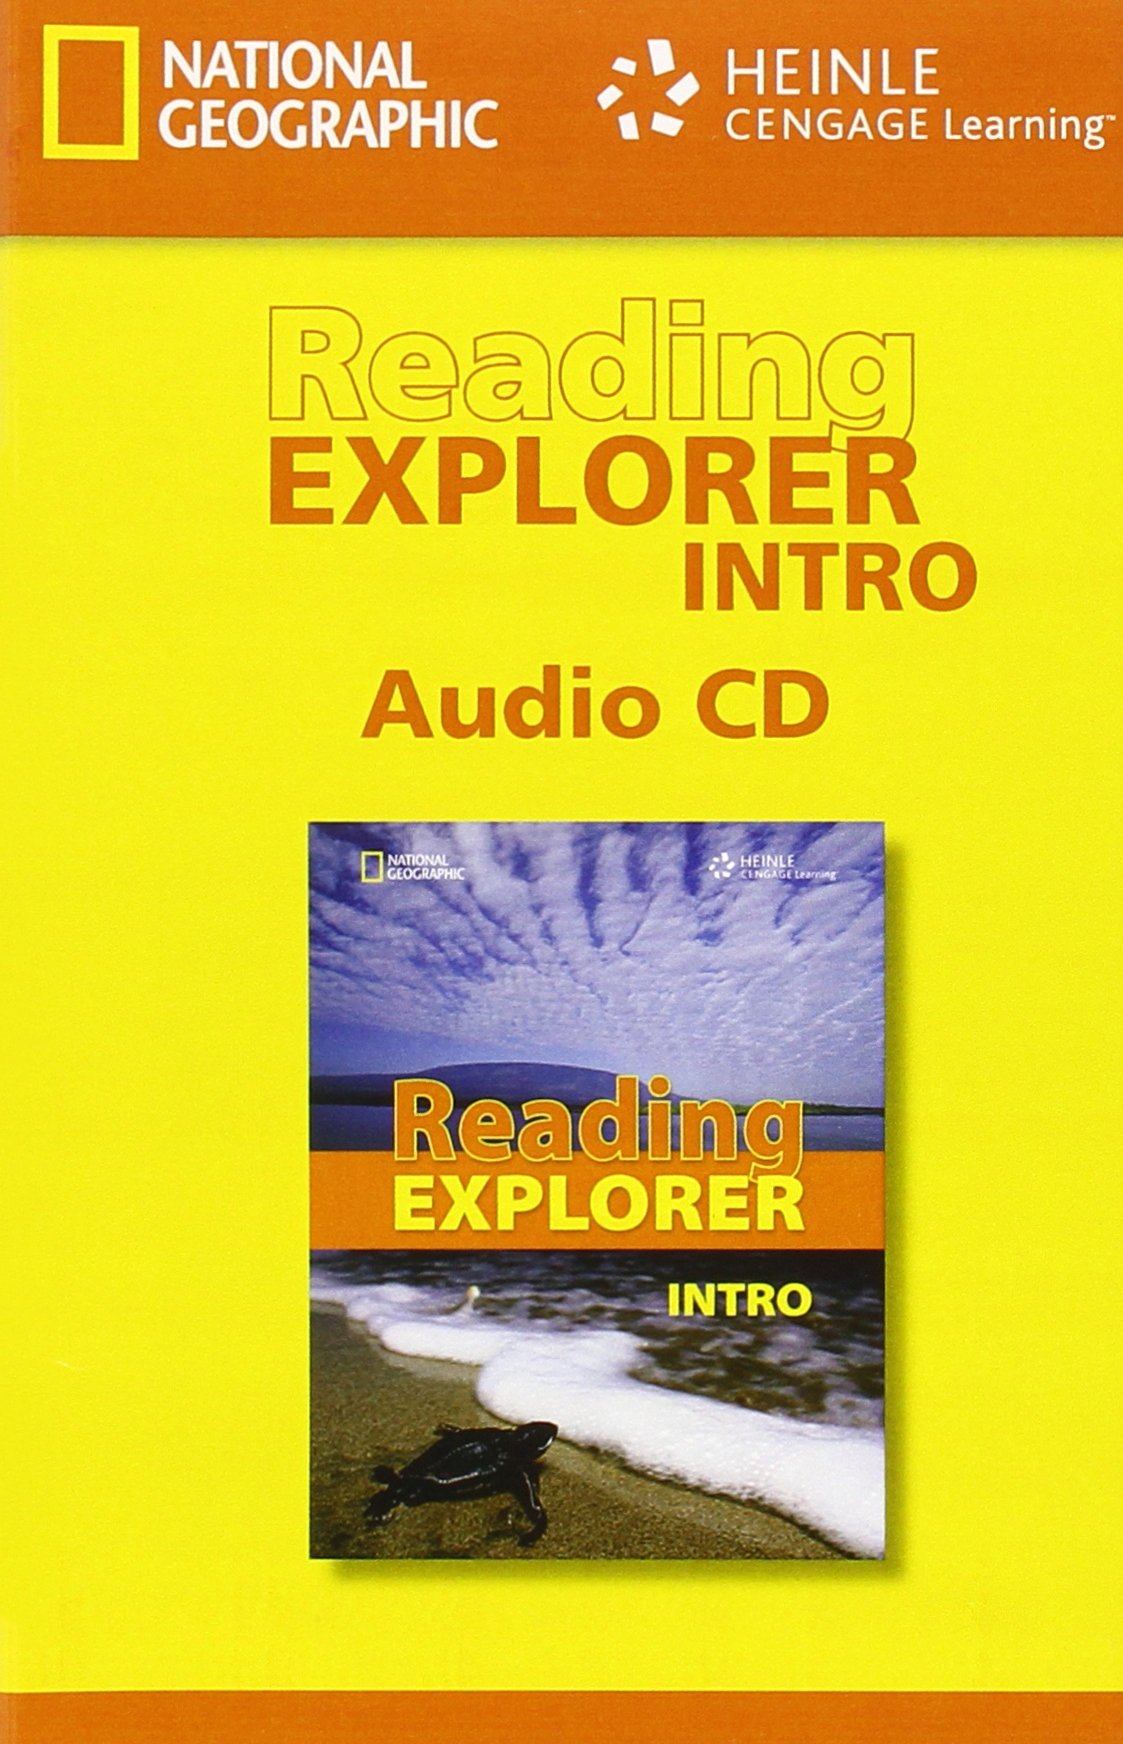 READING EXPLORER INTRO Audio CD(x1)